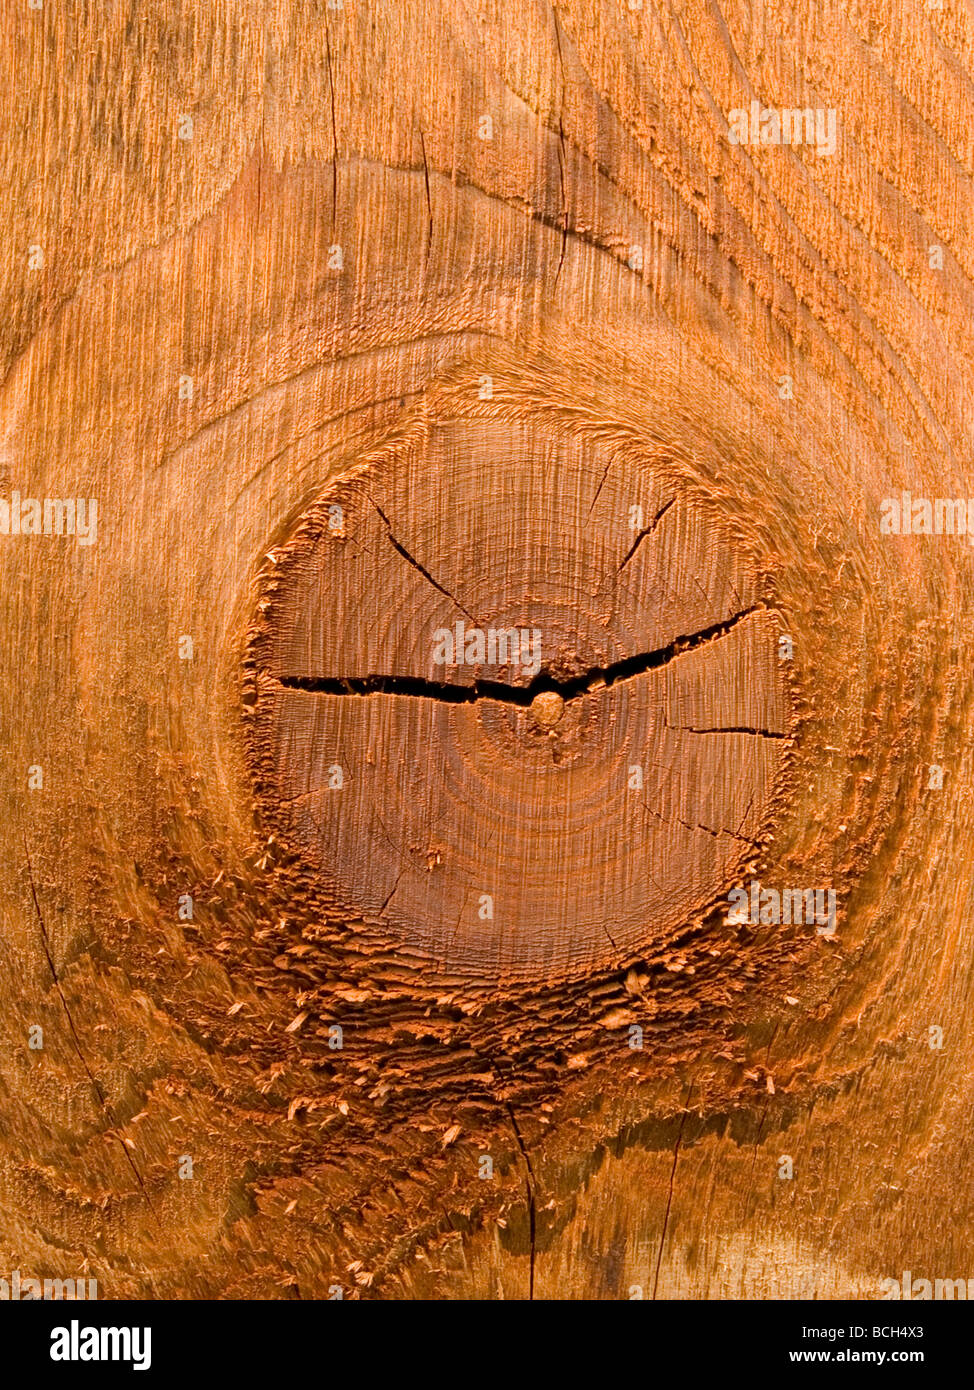 wood grain knot Stock Photo